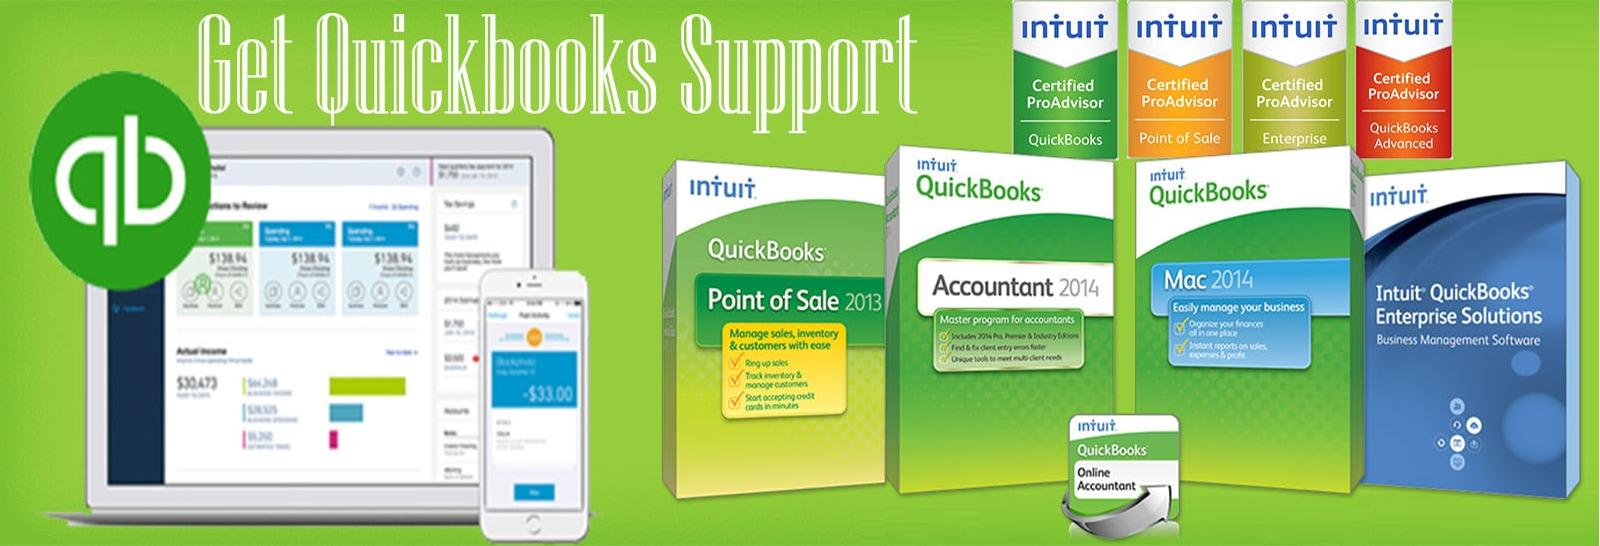 quickbooks online customer service 800